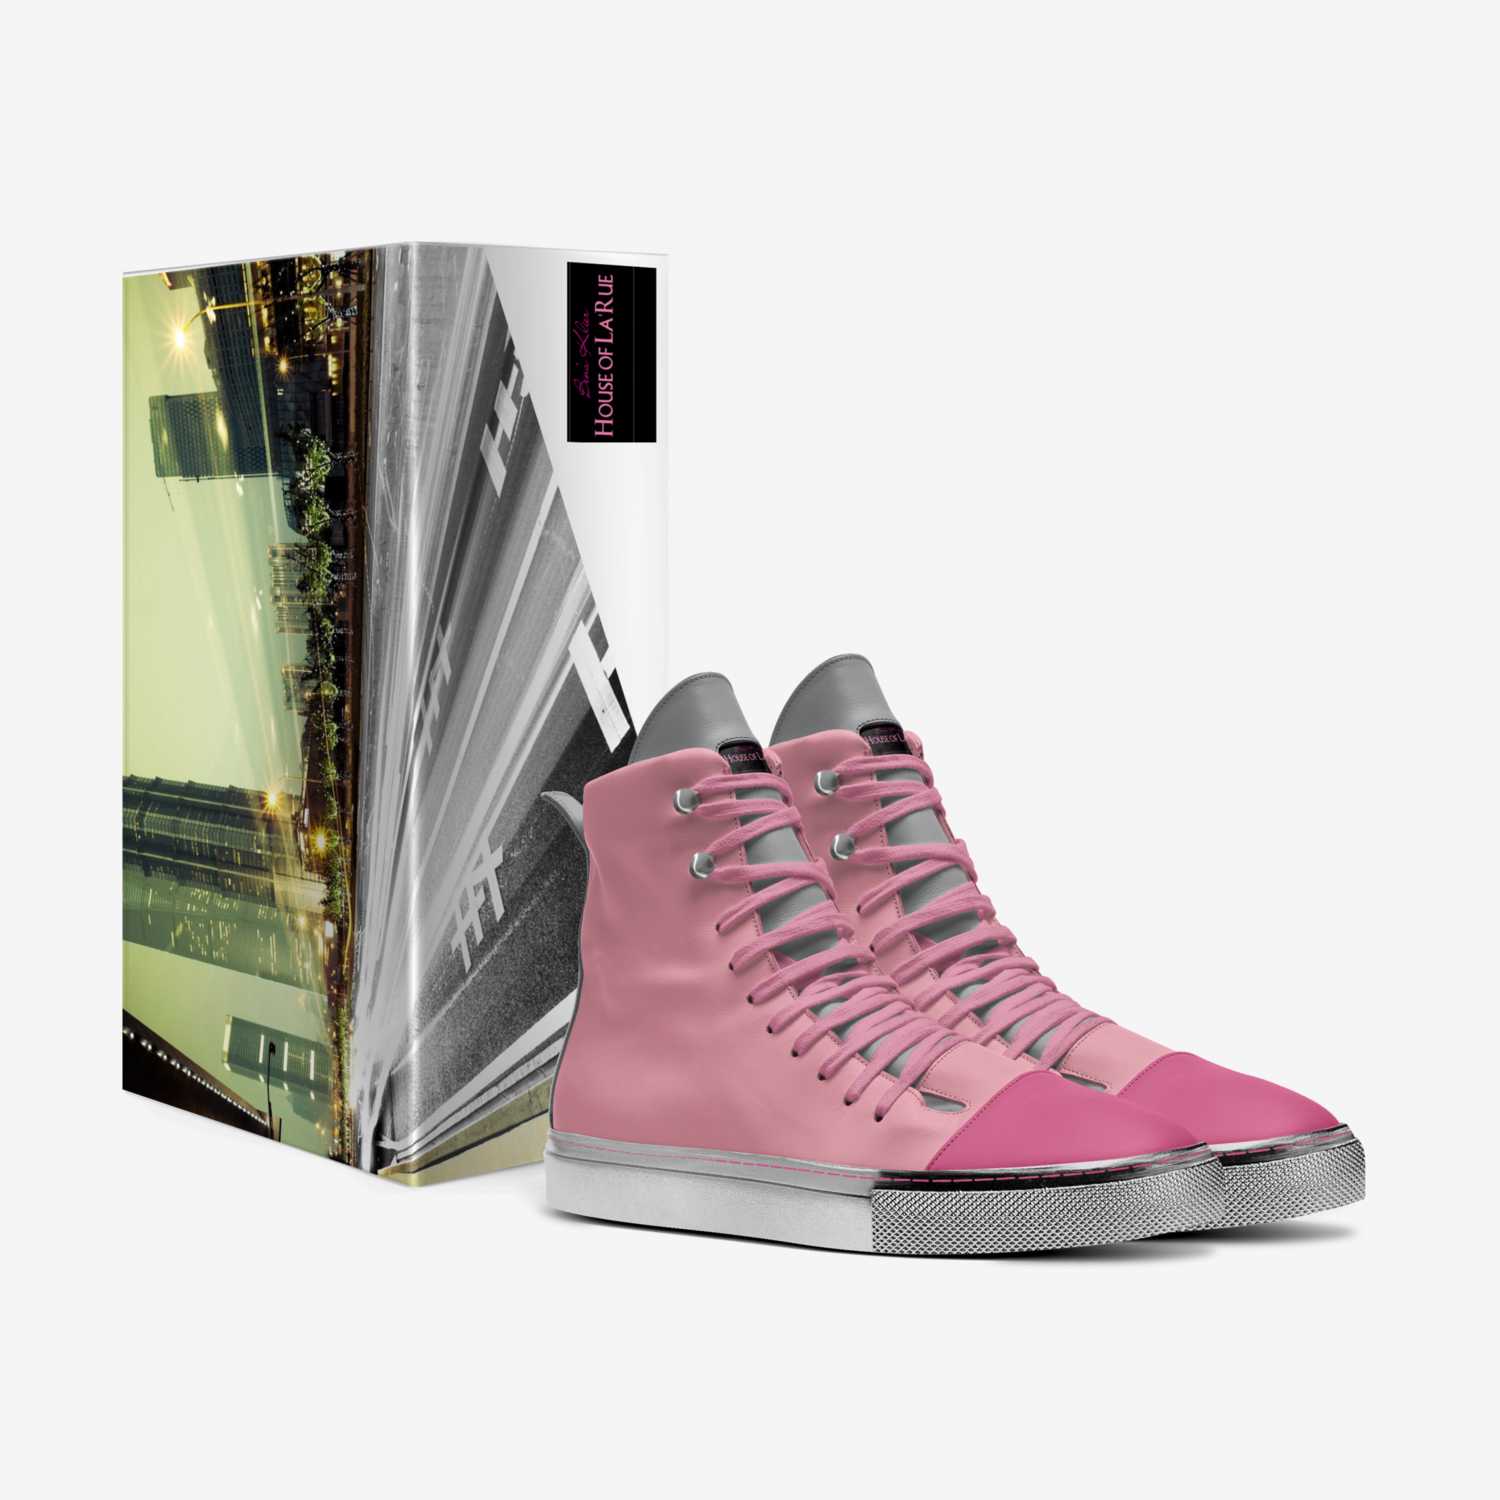 Kolurs custom made in Italy shoes by Bena Klier | Box view